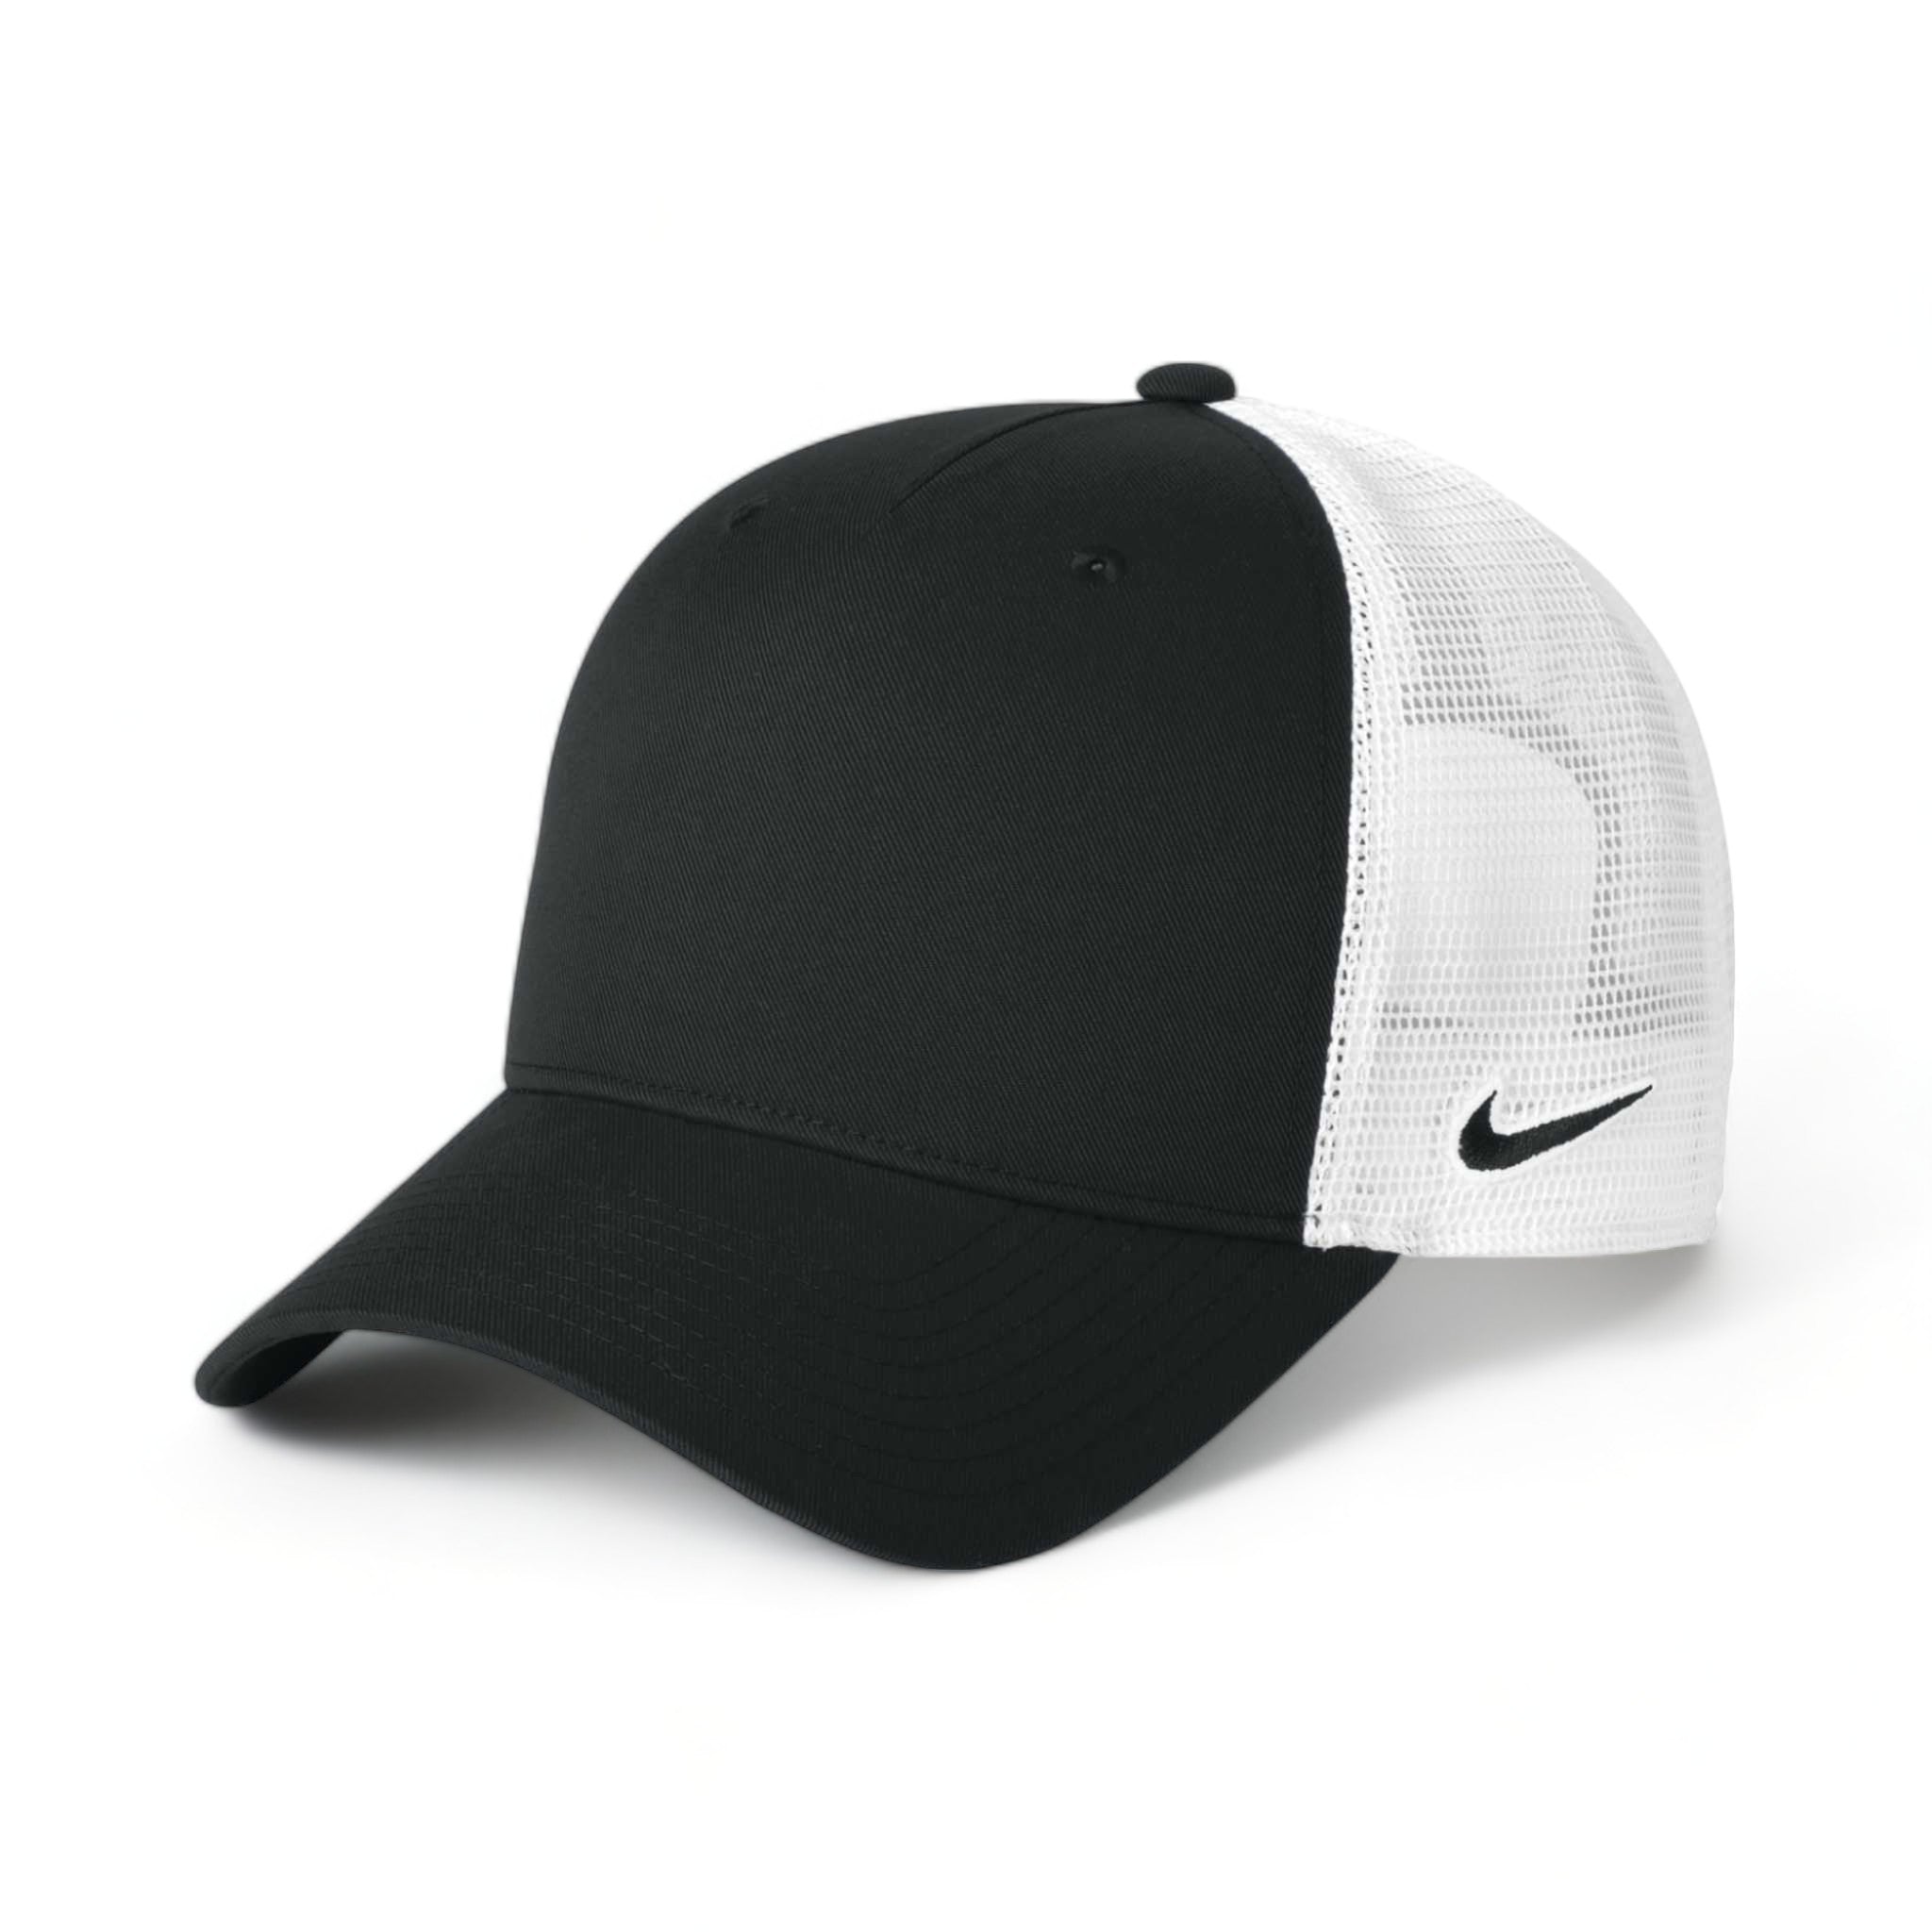 Side view of Nike NKFN9893 custom hat in black and white